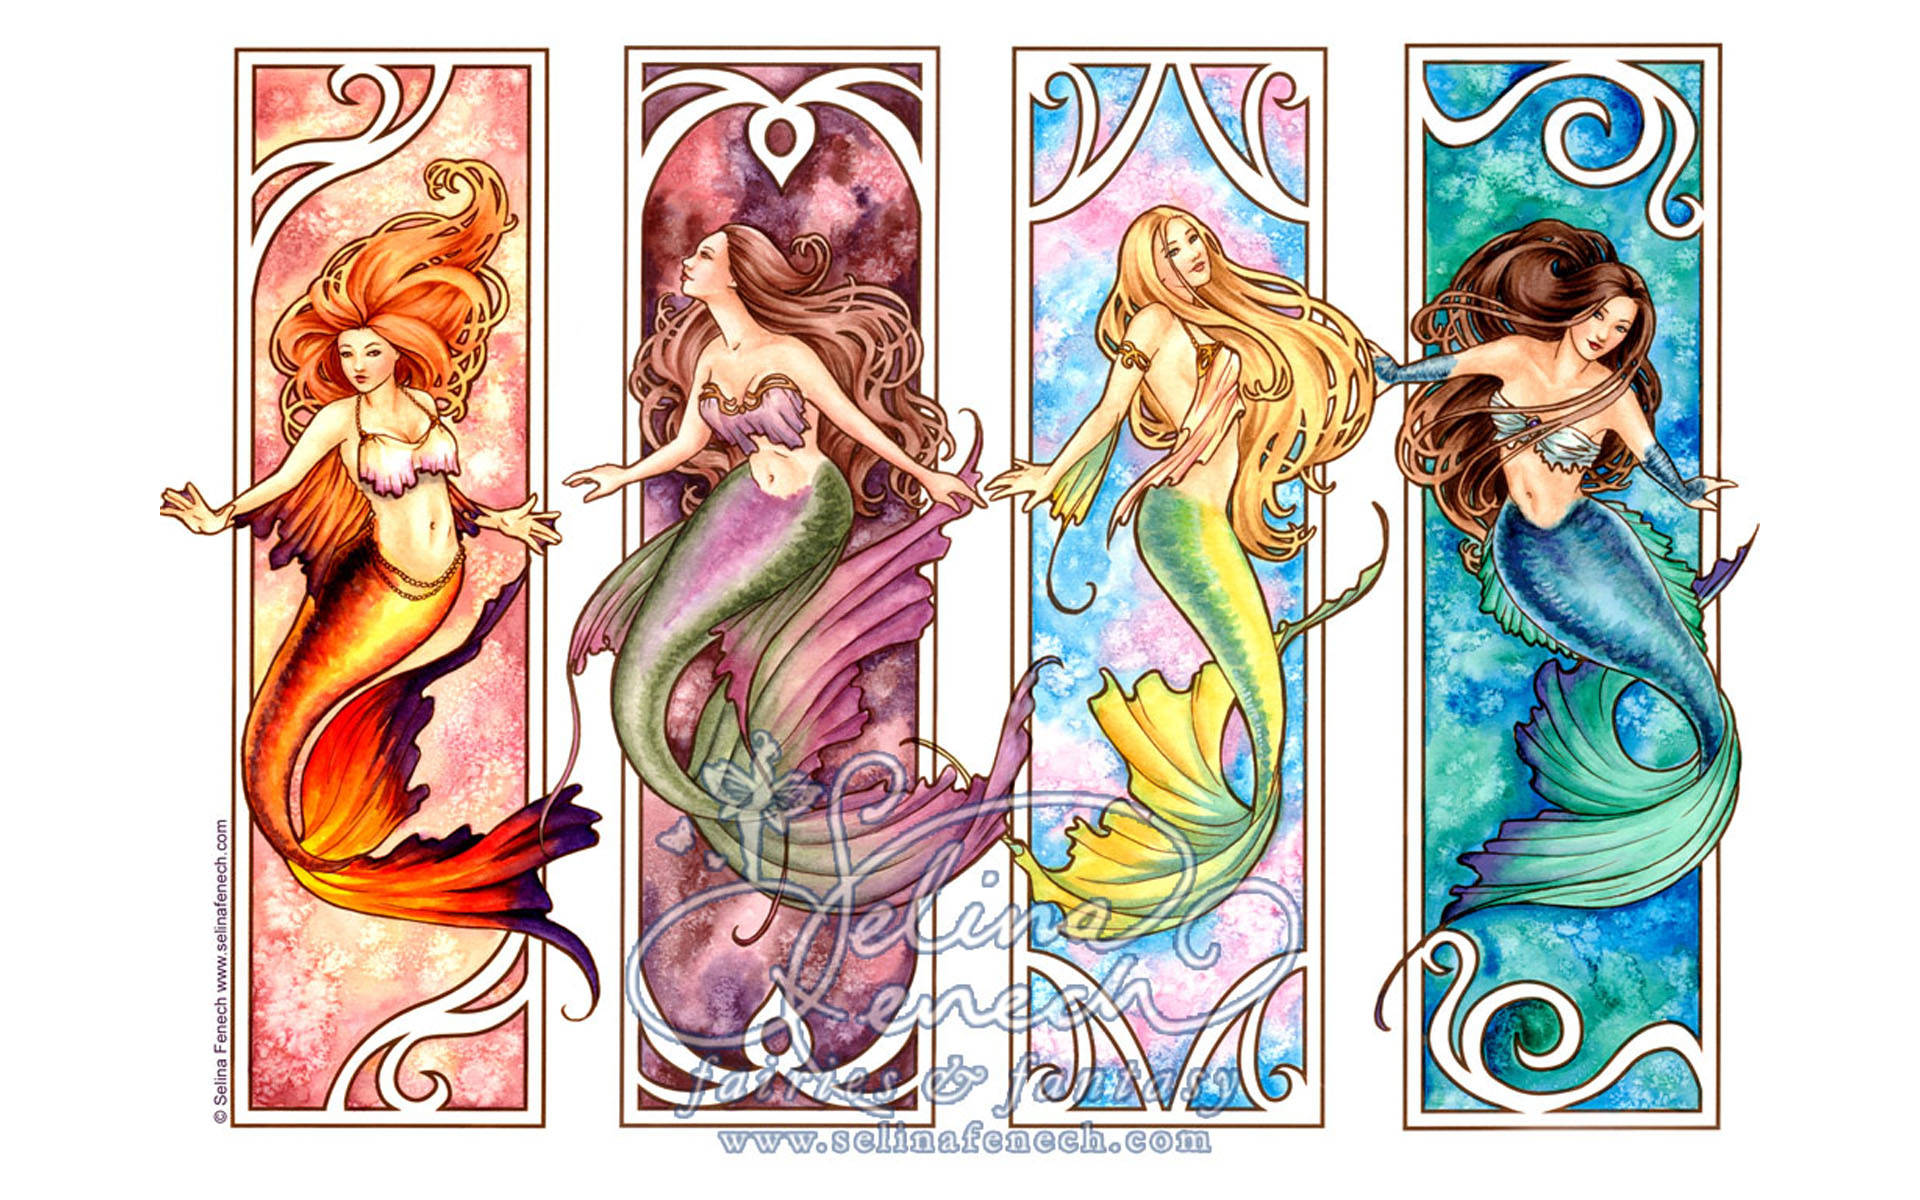 Fantasy art colorful mermaids collage wallpaper.